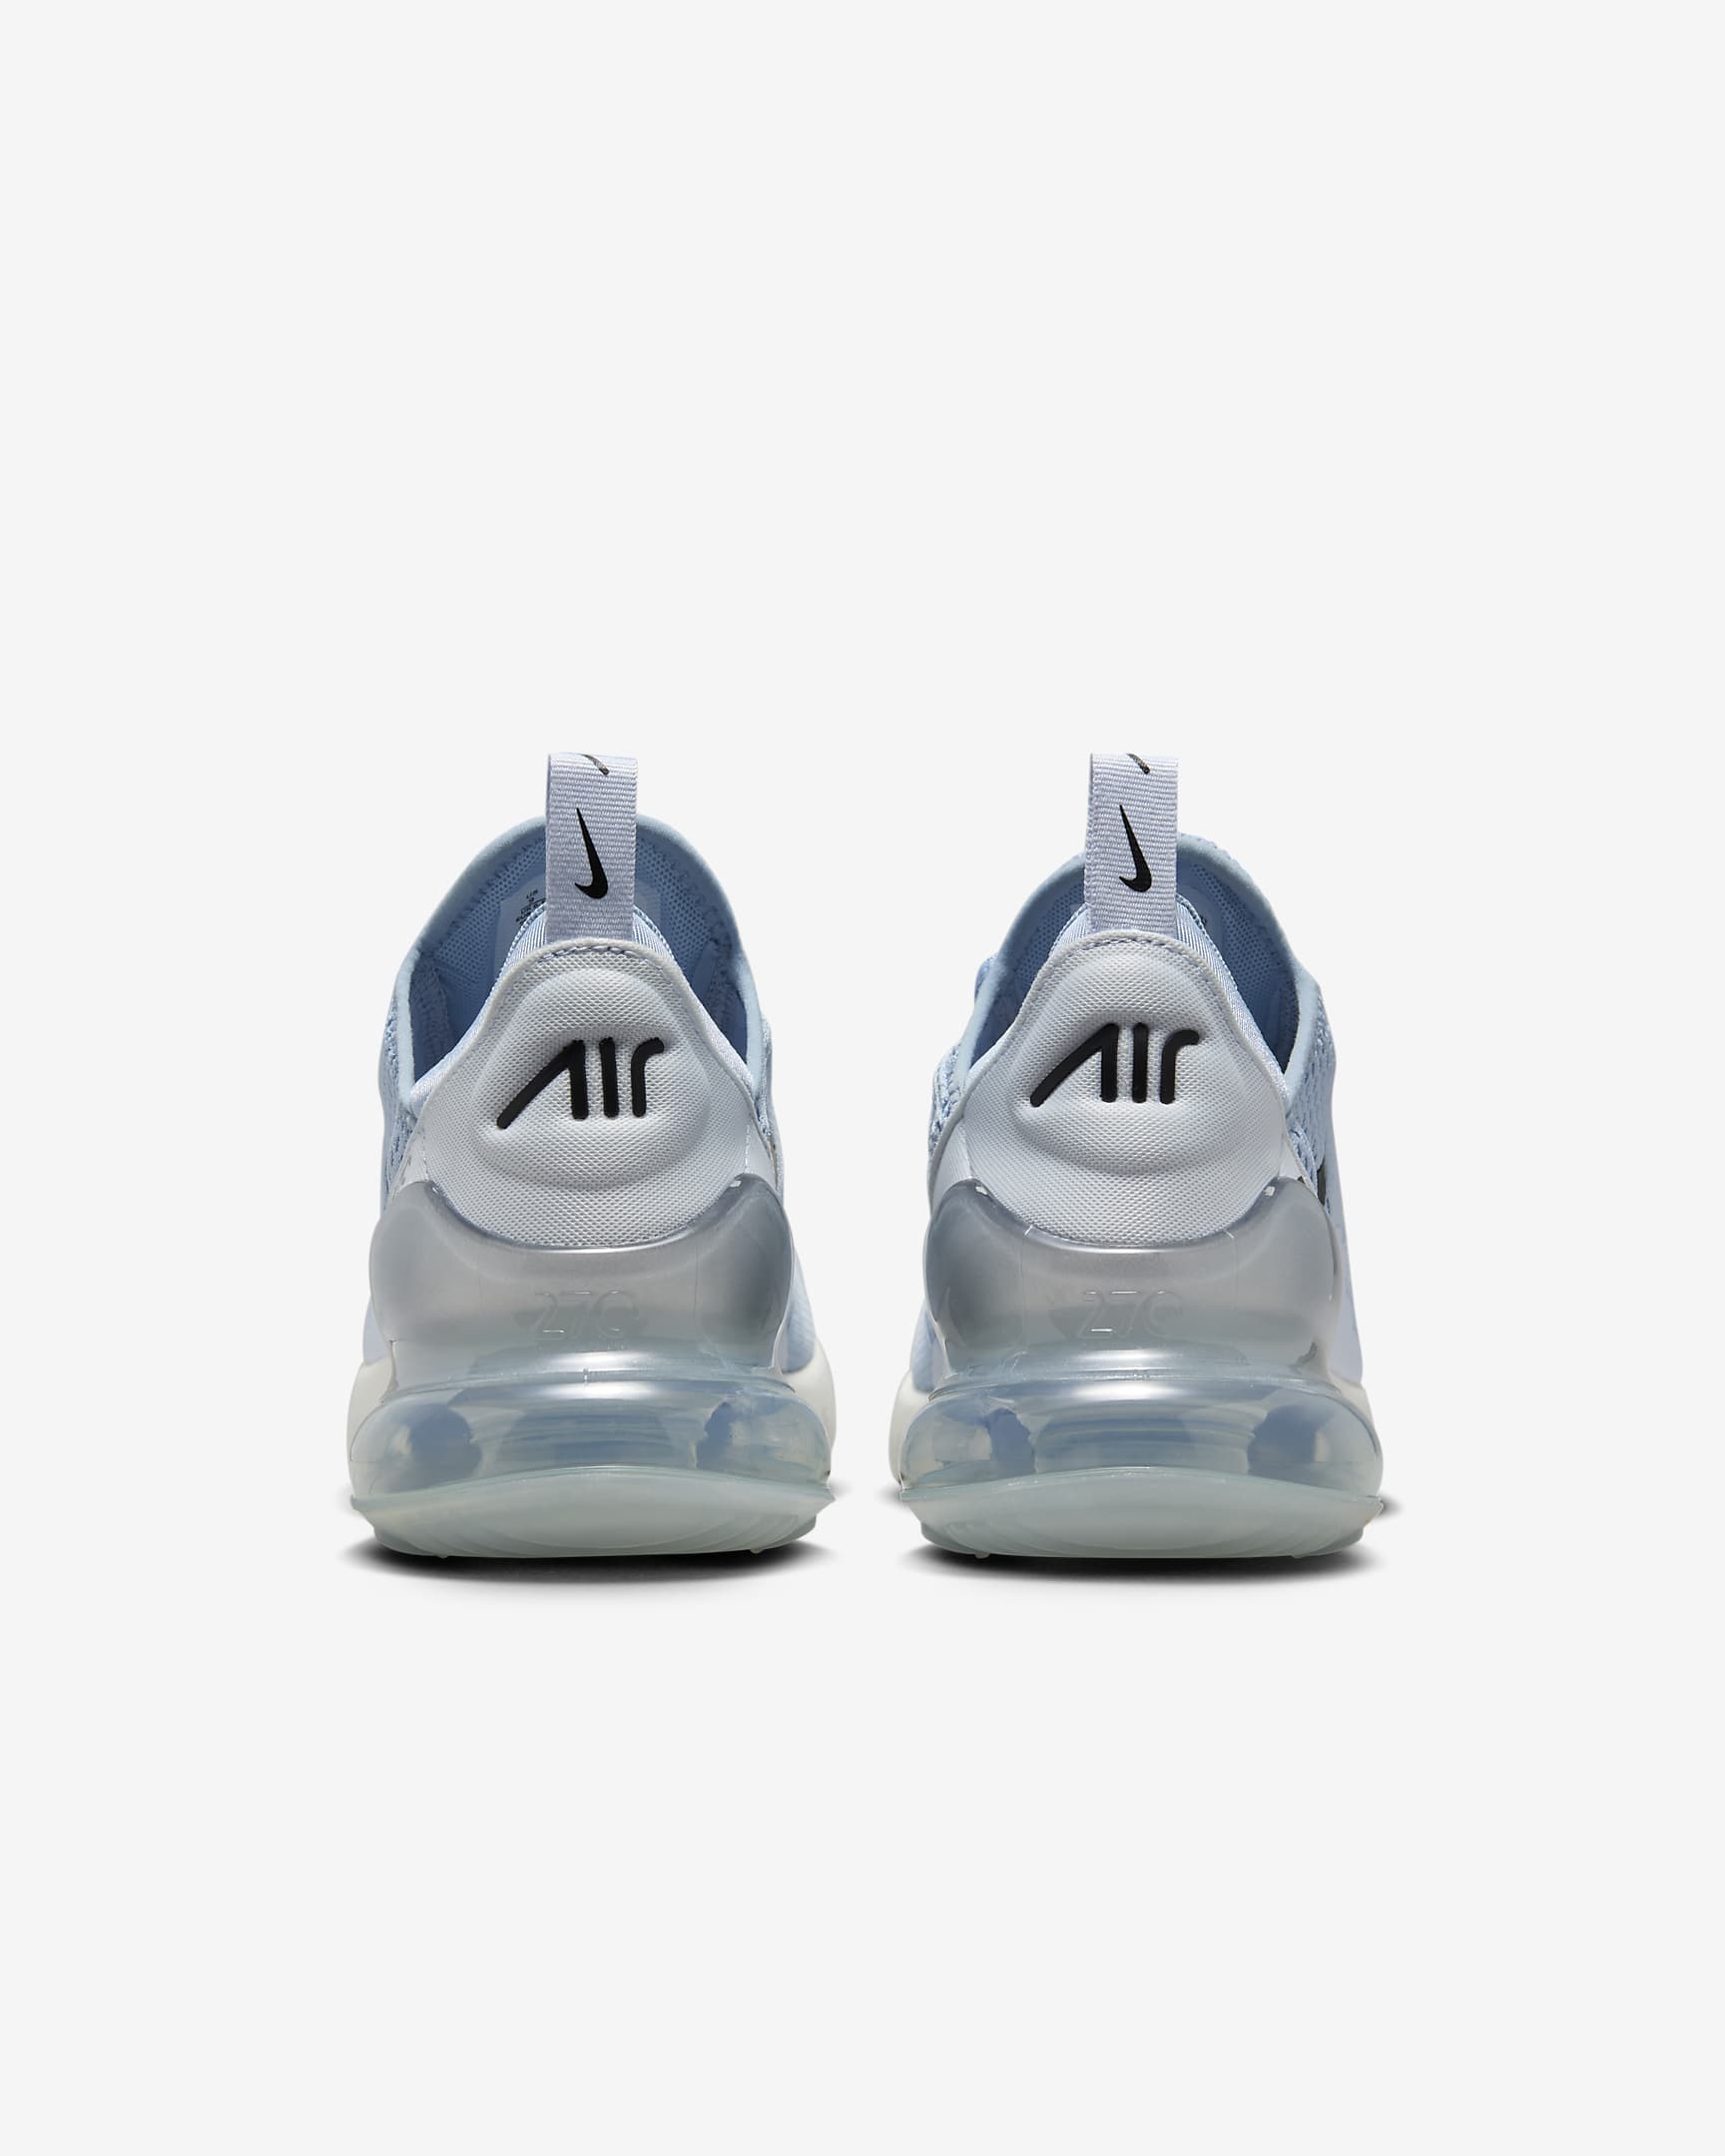 Nike Air Max 270 Women's Shoes - Light Armory Blue/Football Grey/Summit White/Black